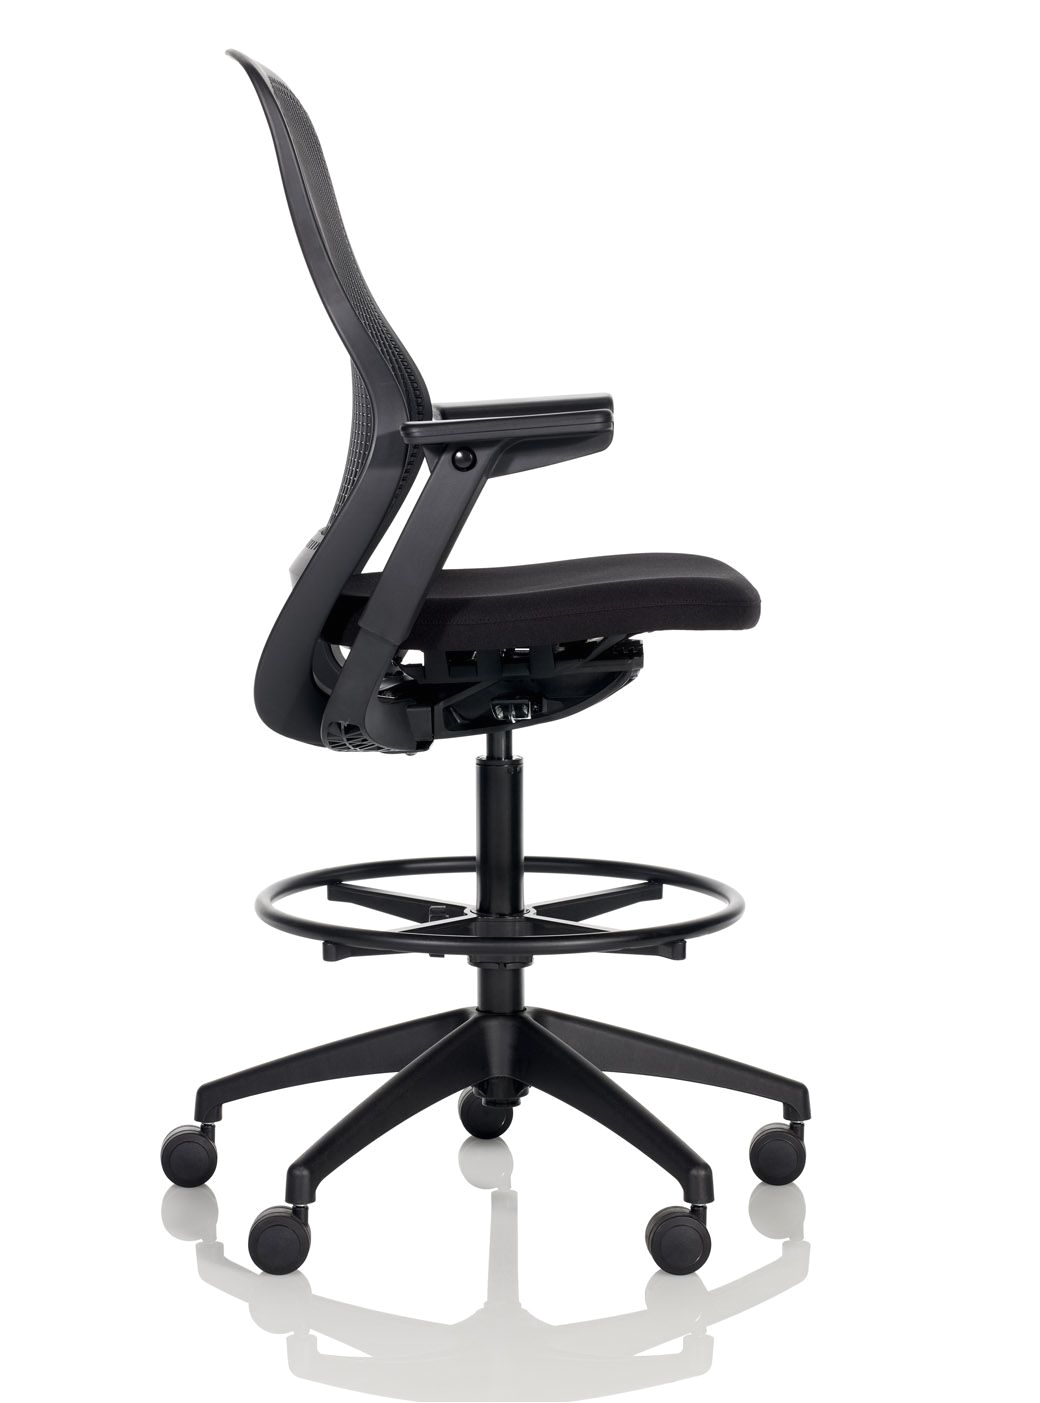 Knoll Regeneration High Task Chair the Cinger Multi Function Task Chair Adjustable Lumbar 4 Way